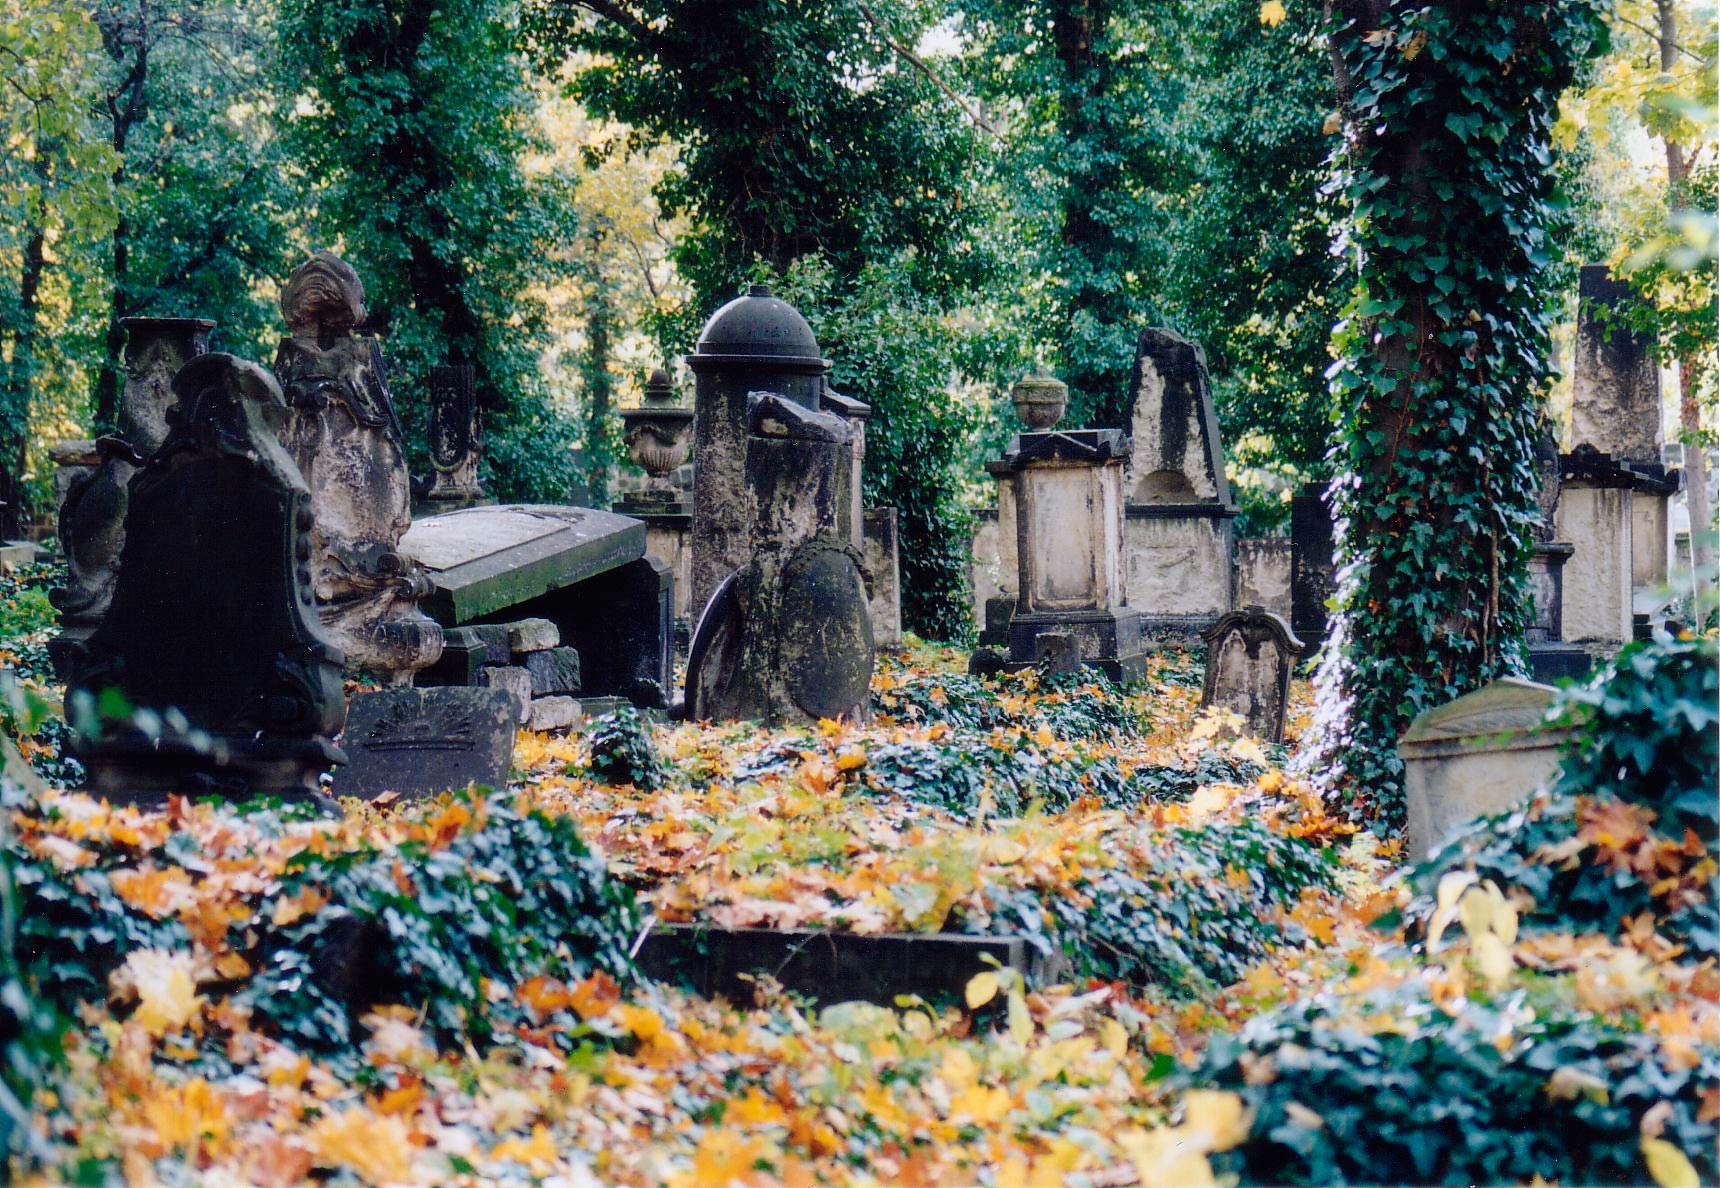 Eliasfriedhof